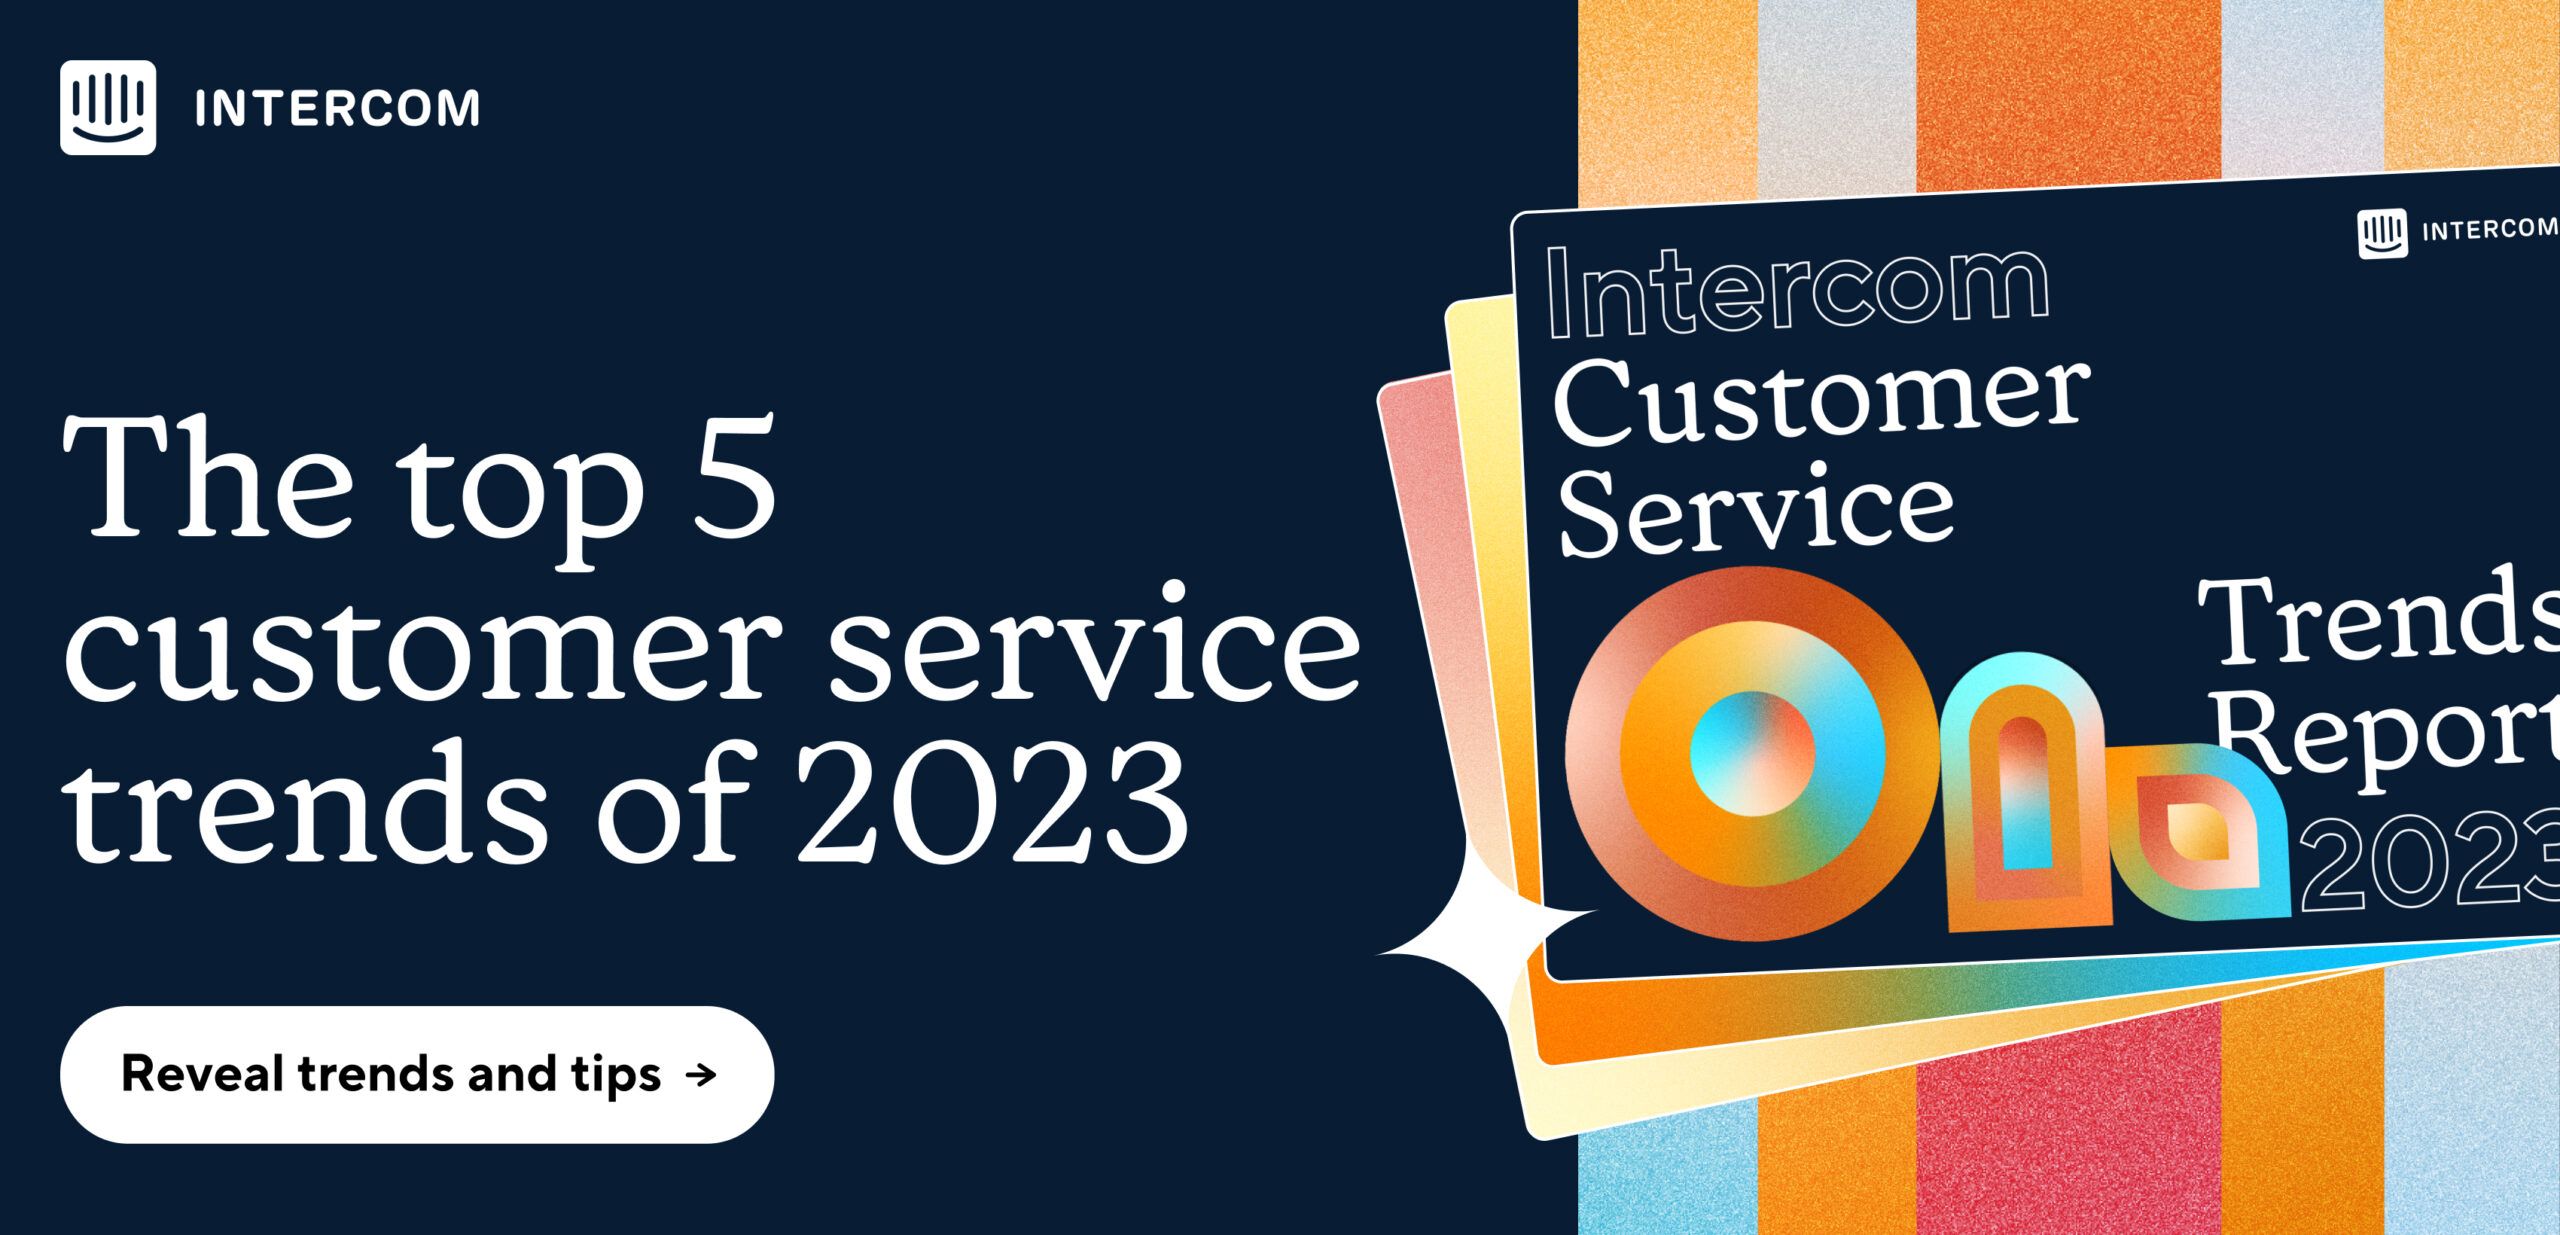 Download the Intercom Customer Service Trends Report for 2023